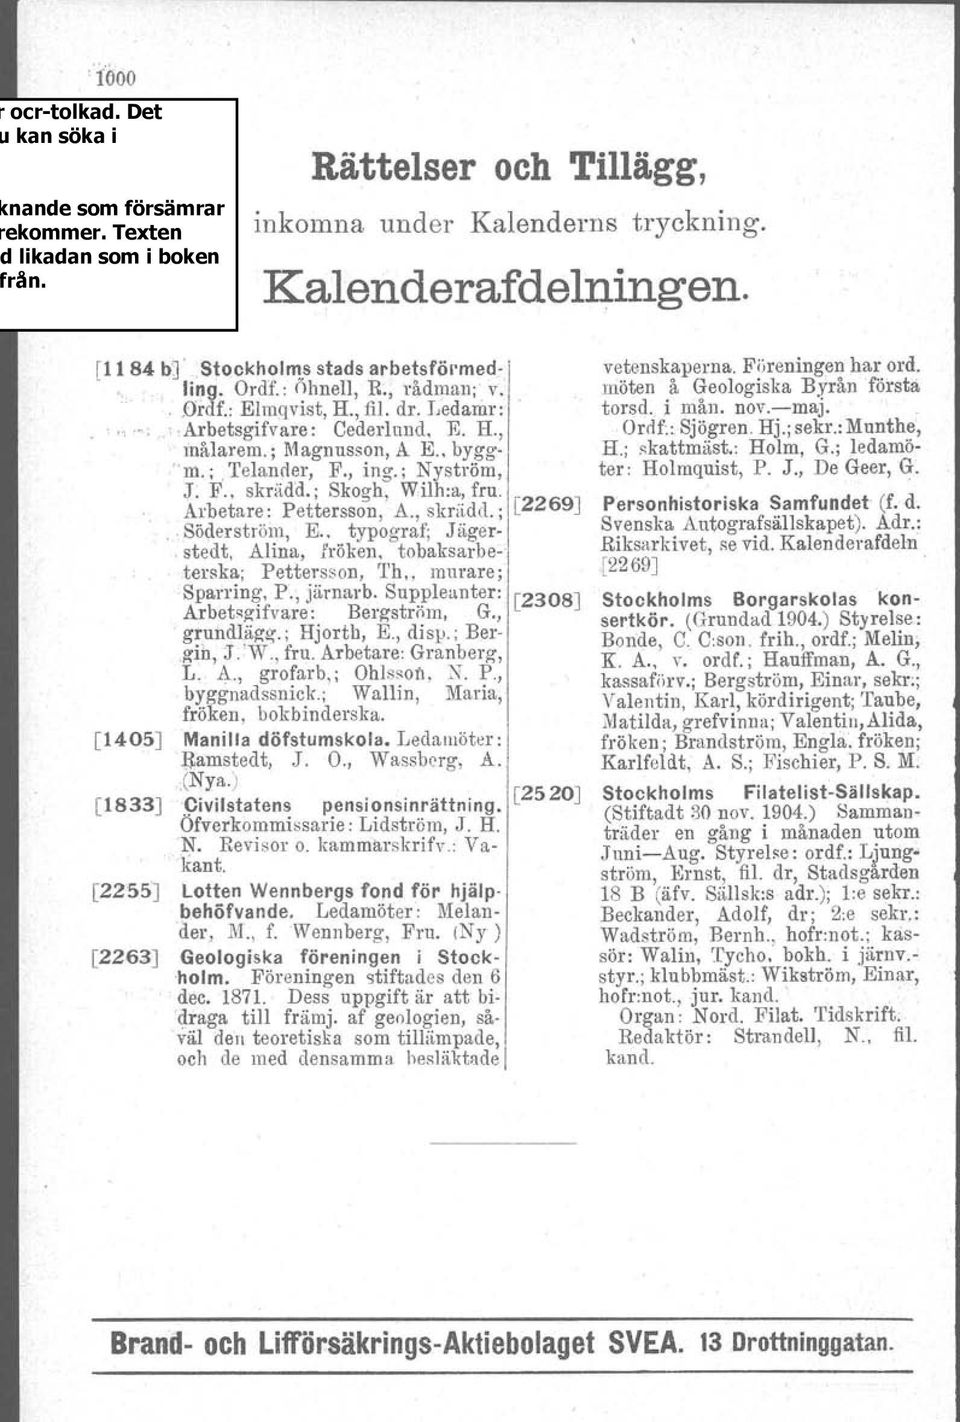 . typograf; Jägerstedt, Alina, fröken, tobaksarbeterska. Pettersson, 'rh" murare; Sparring, P., järnarb. Suppleanter: Arbetsaifvare: Bergström, G., [2308J grundläez.: Hjorth, E., disp.: Bergin, J.'W.